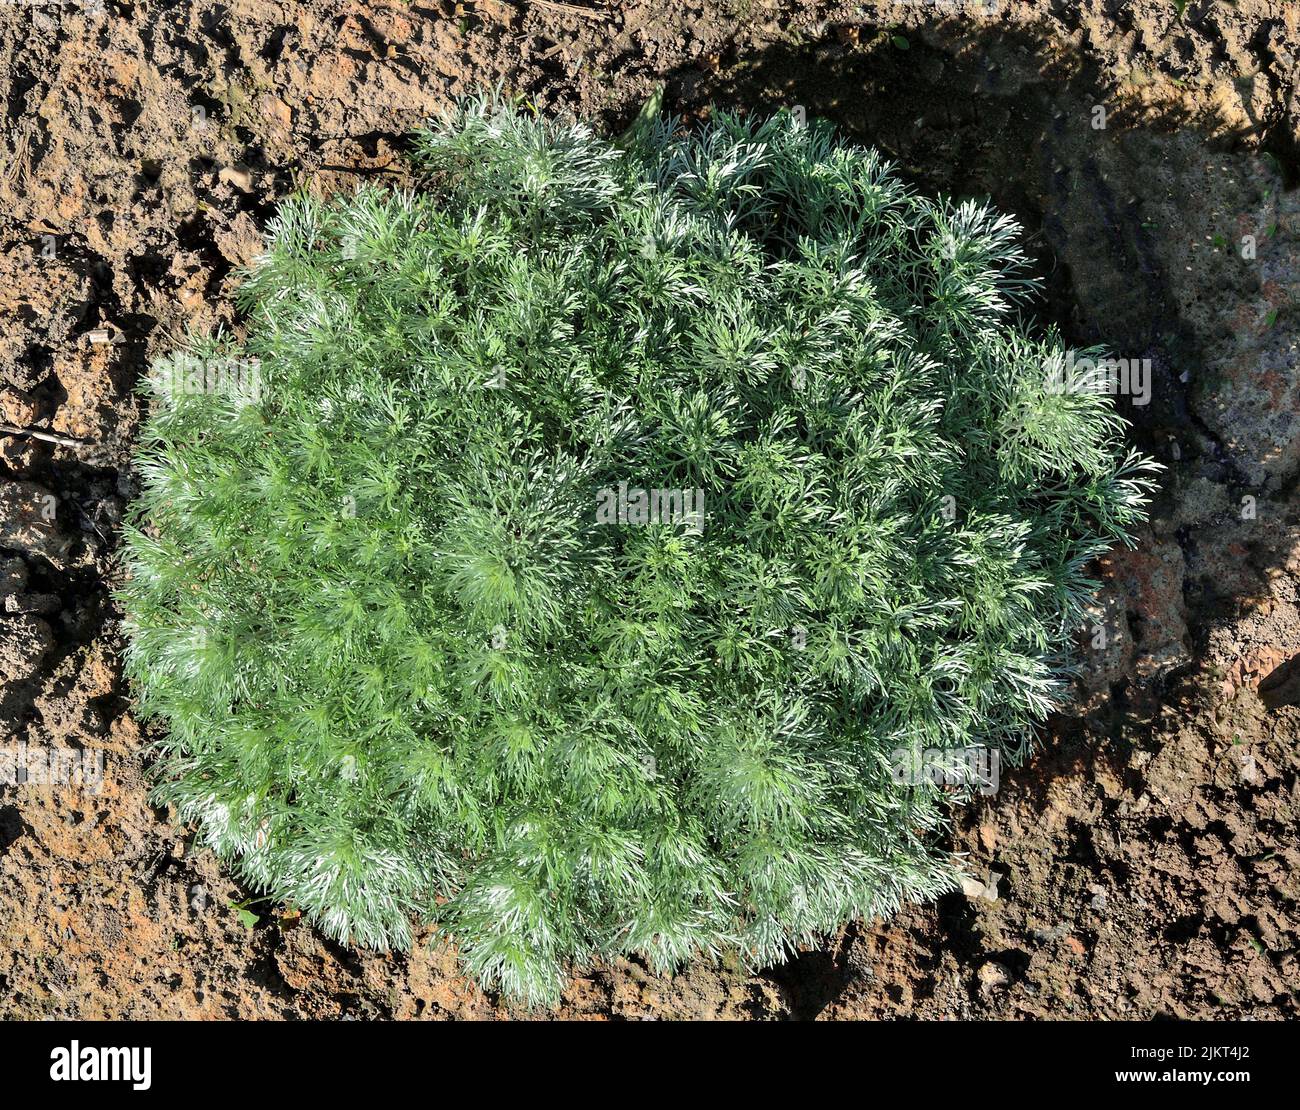 Artemisia schmidtiana nana es una planta ornamental perenne compacta, semi perenne, con forma esférica de follaje suave, verde plateado, como pelaje esponjoso. D Foto de stock